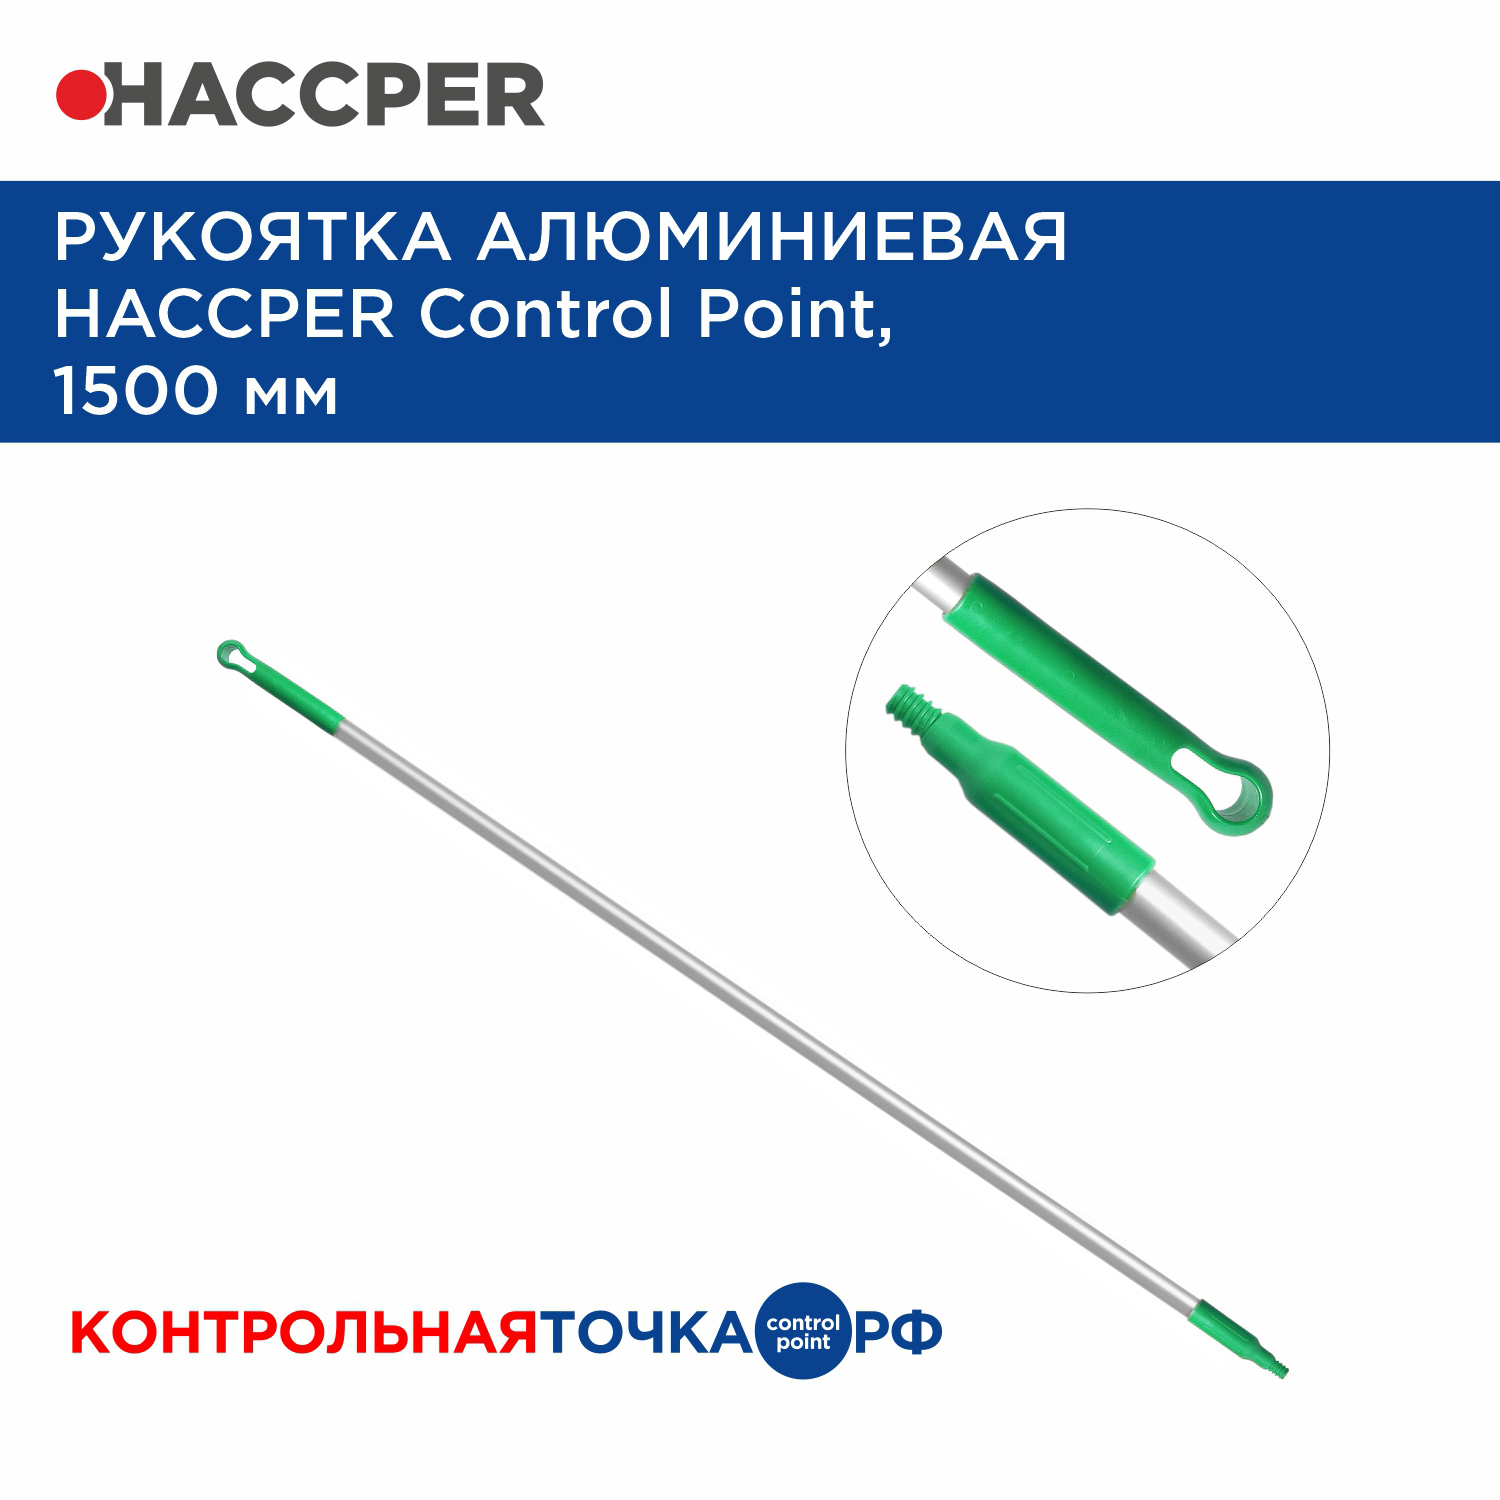 Рукоятка алюминиевая HACCPER Control Point,1500 мм, зеленая